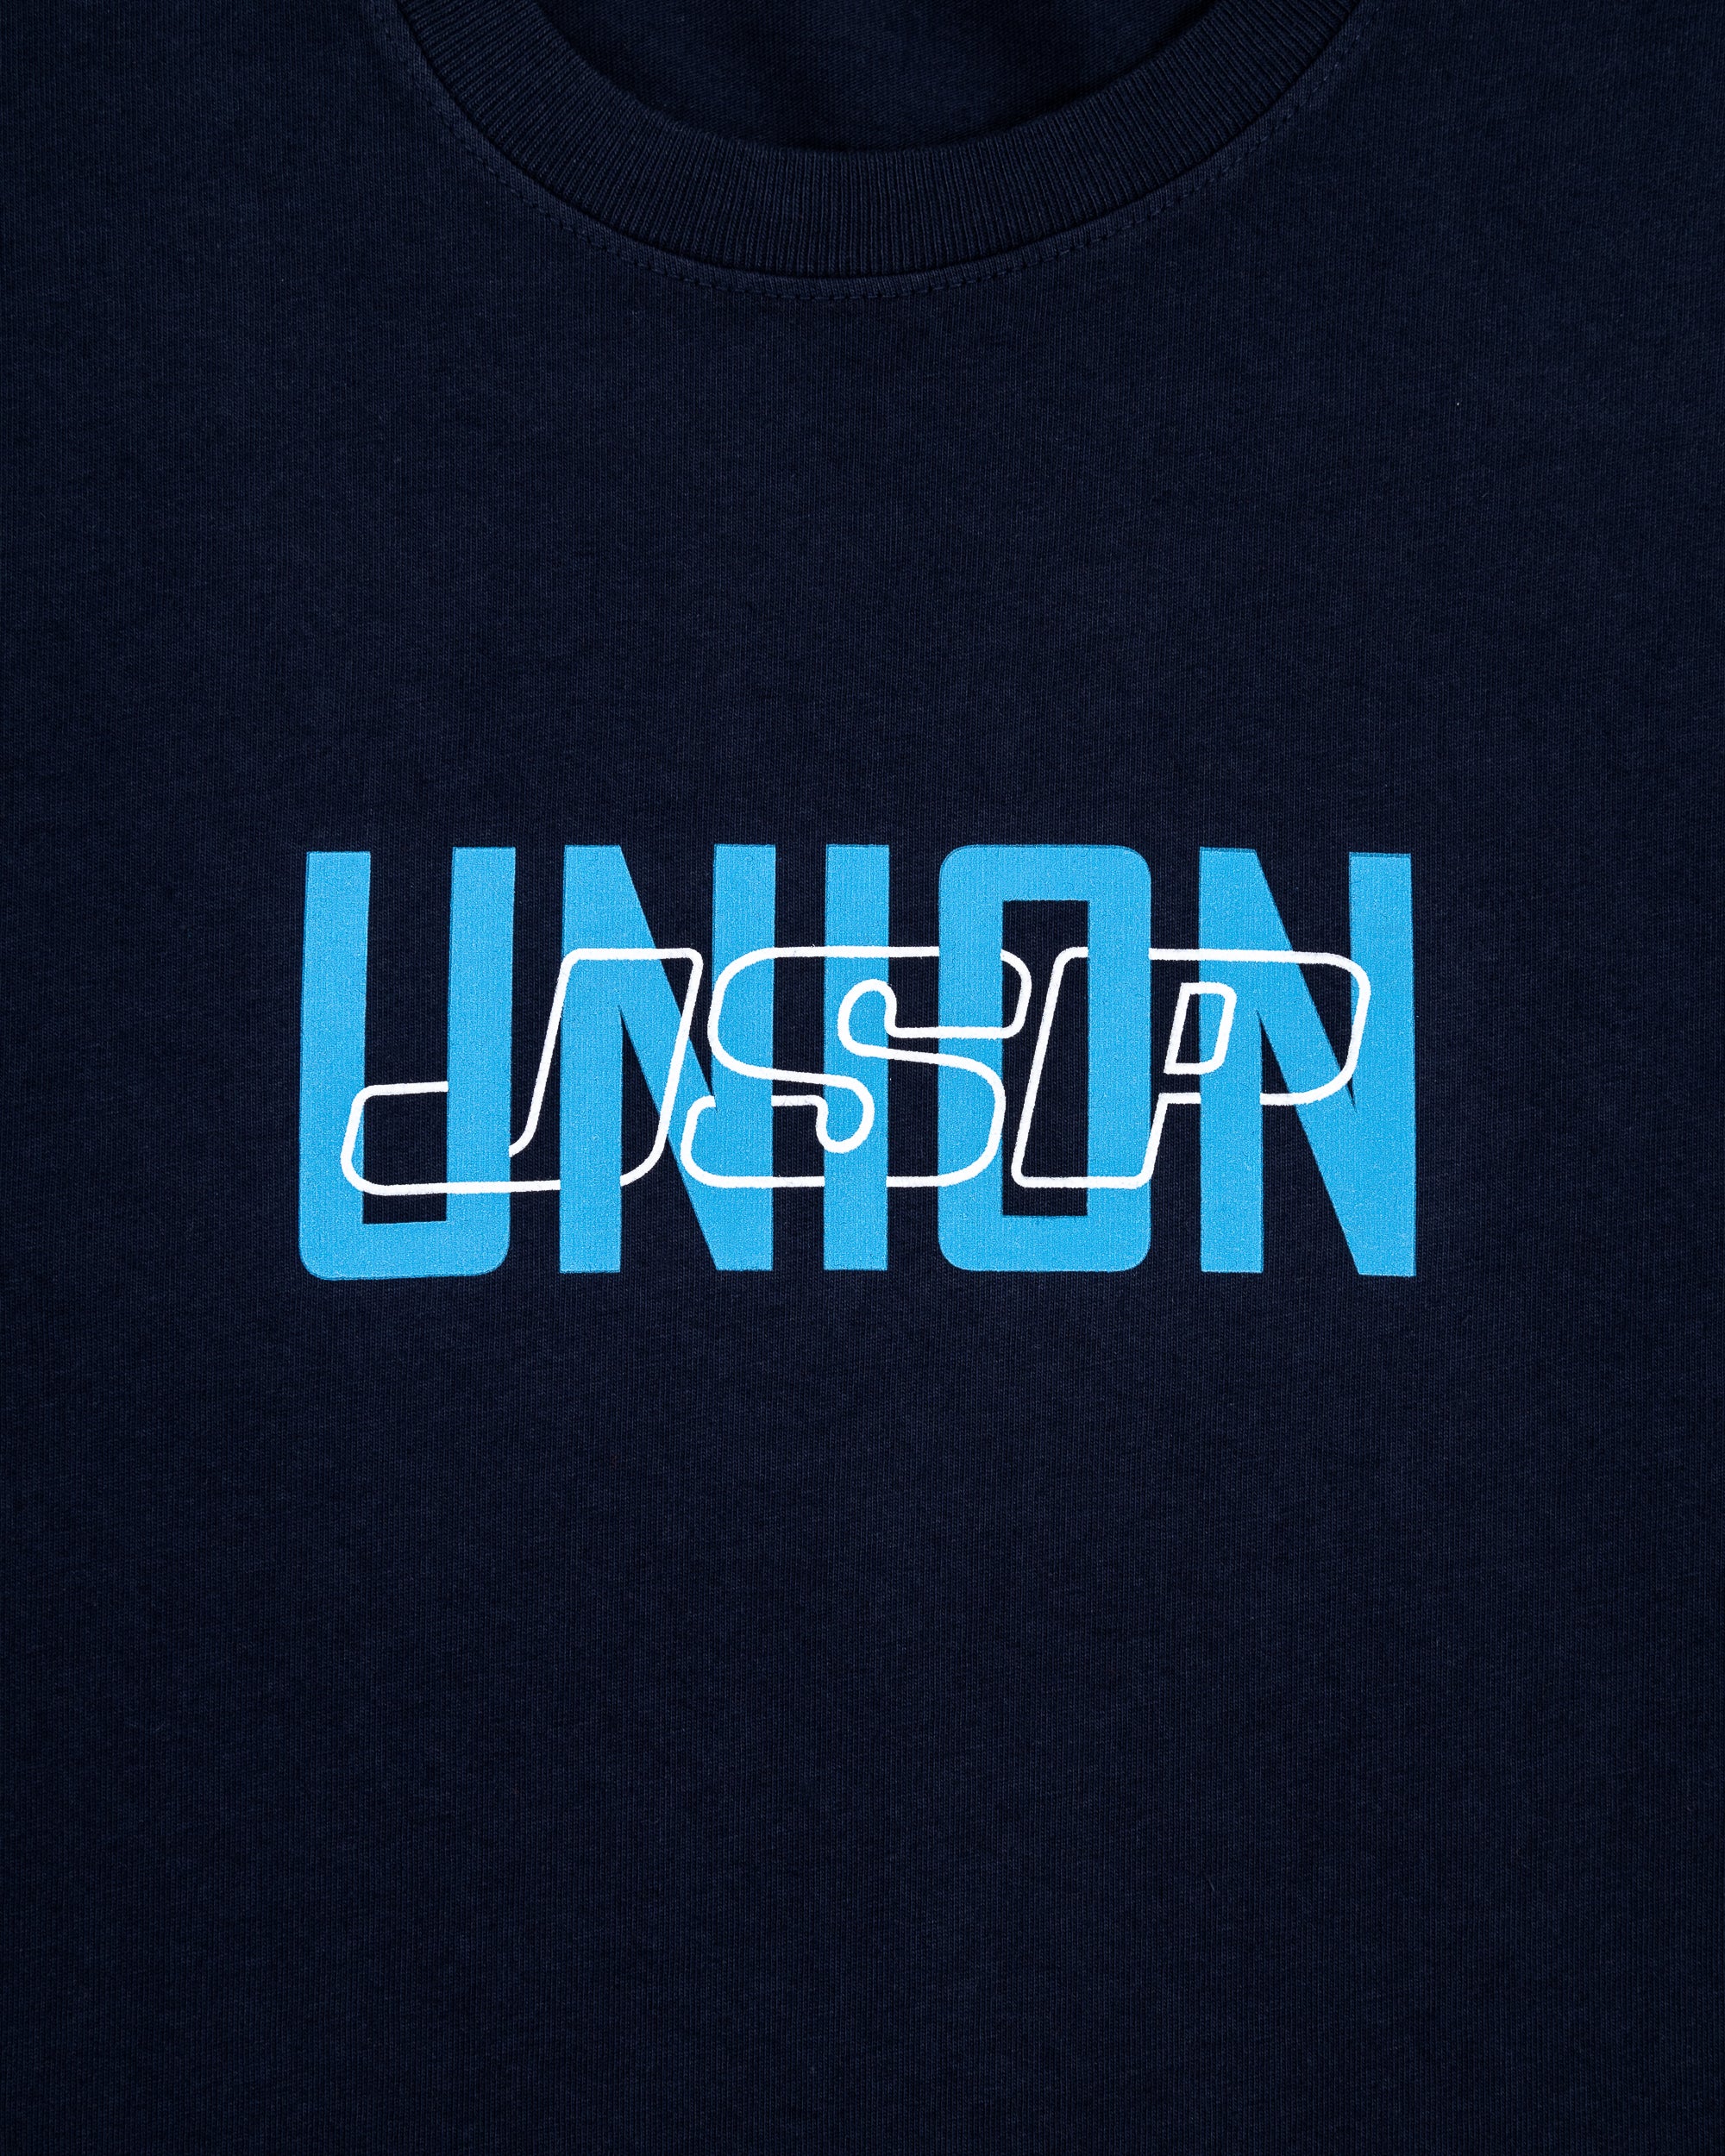 Philadelphia Union T-Shirt, Tee, Apparel - Philadelphia Union Store